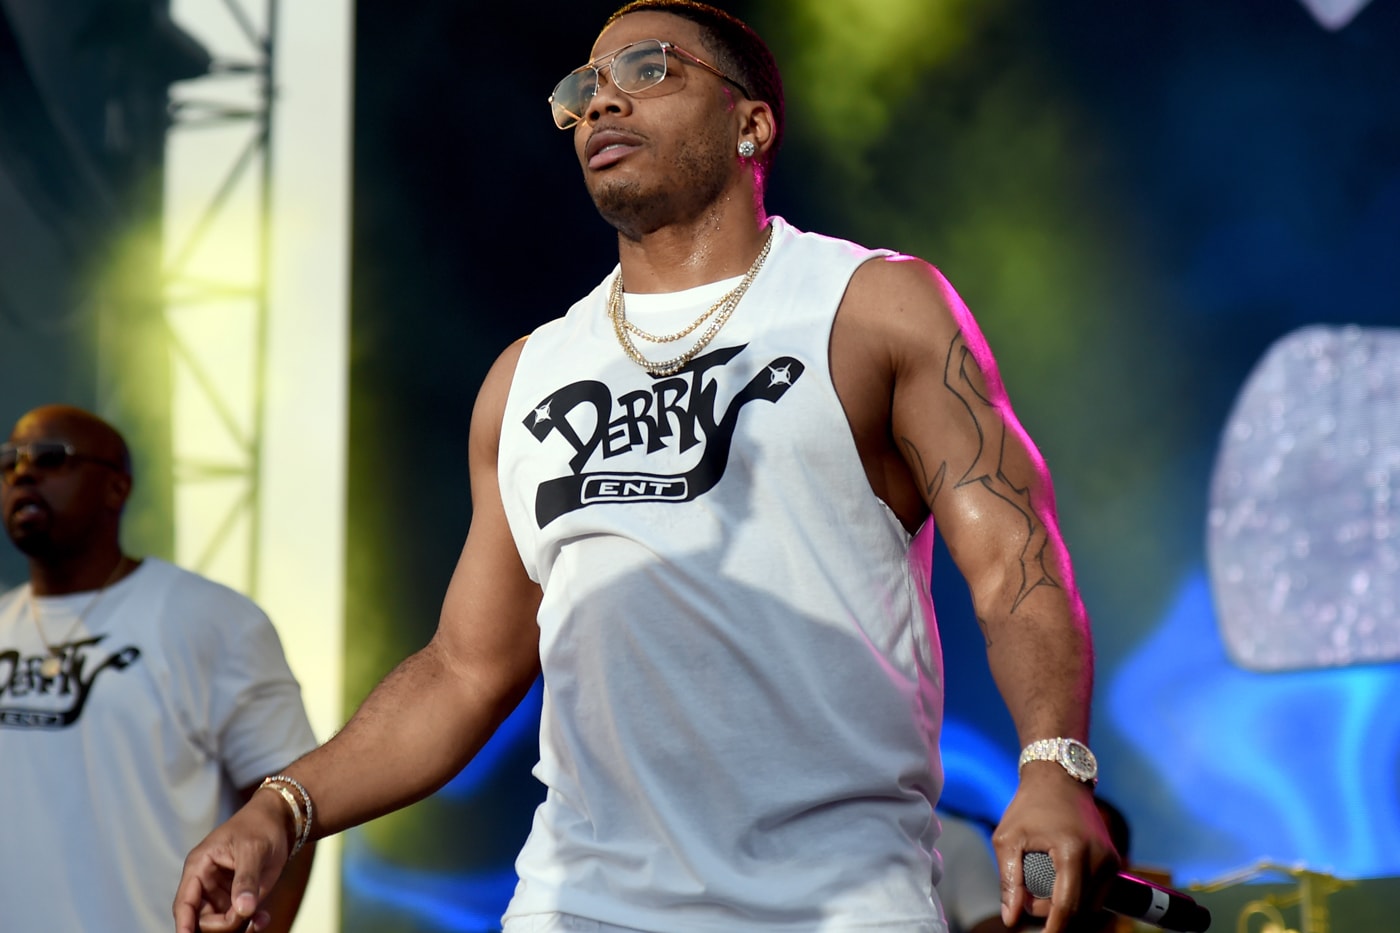 Nelly Rape Allegation Arrests Release